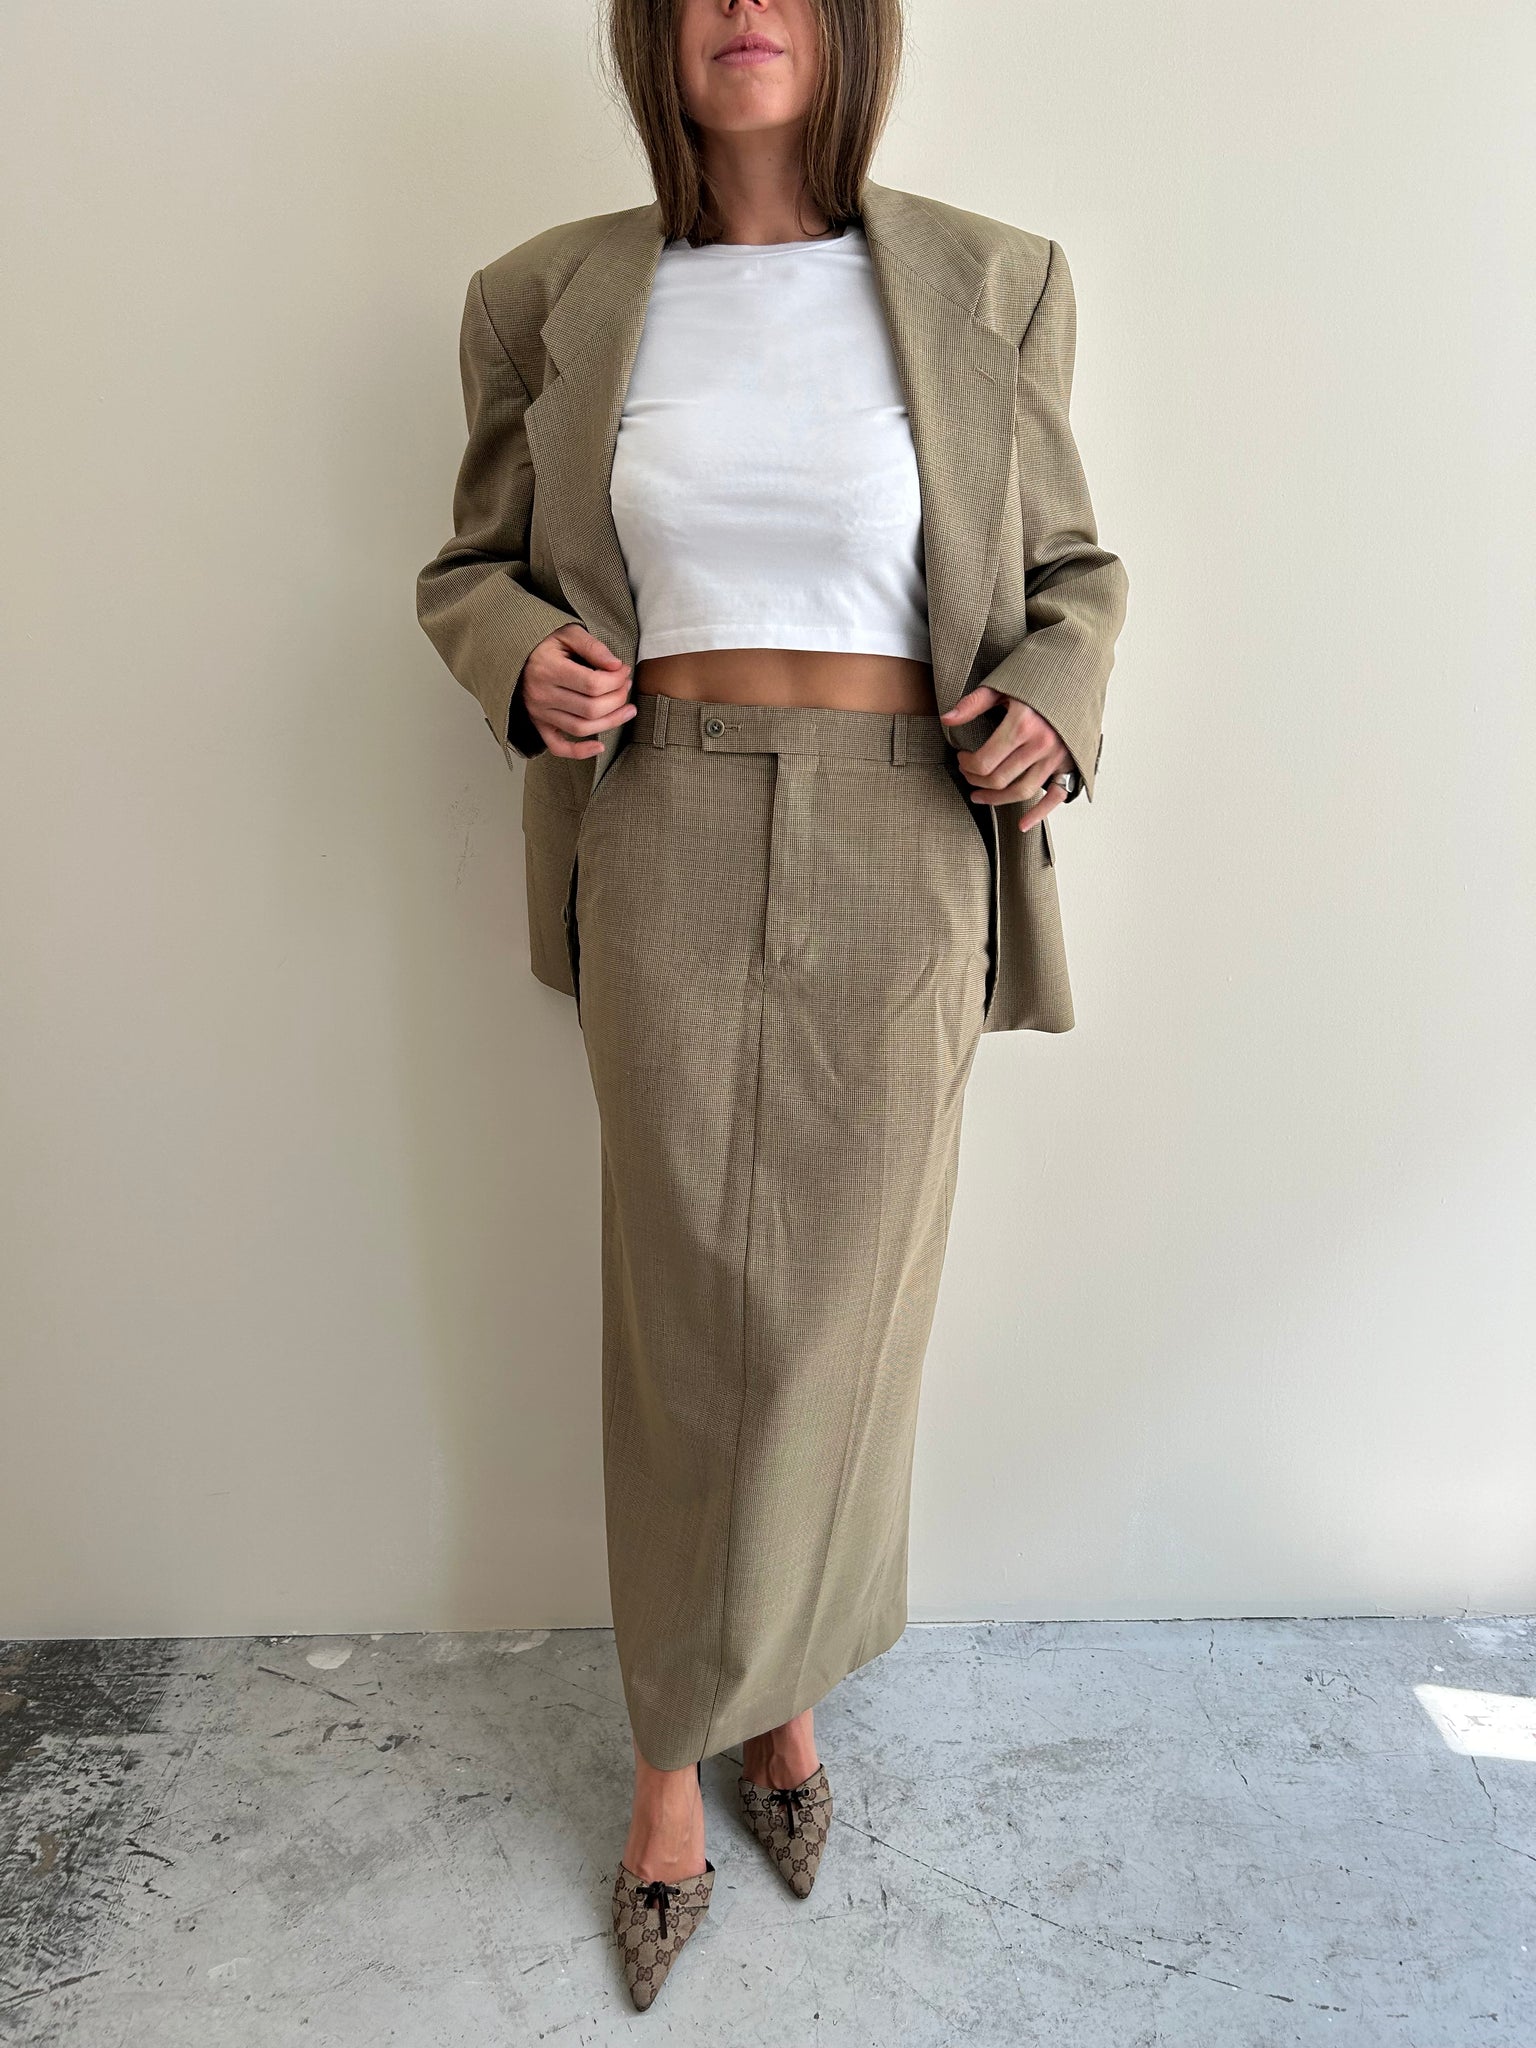 Long skirt suit in brown tones